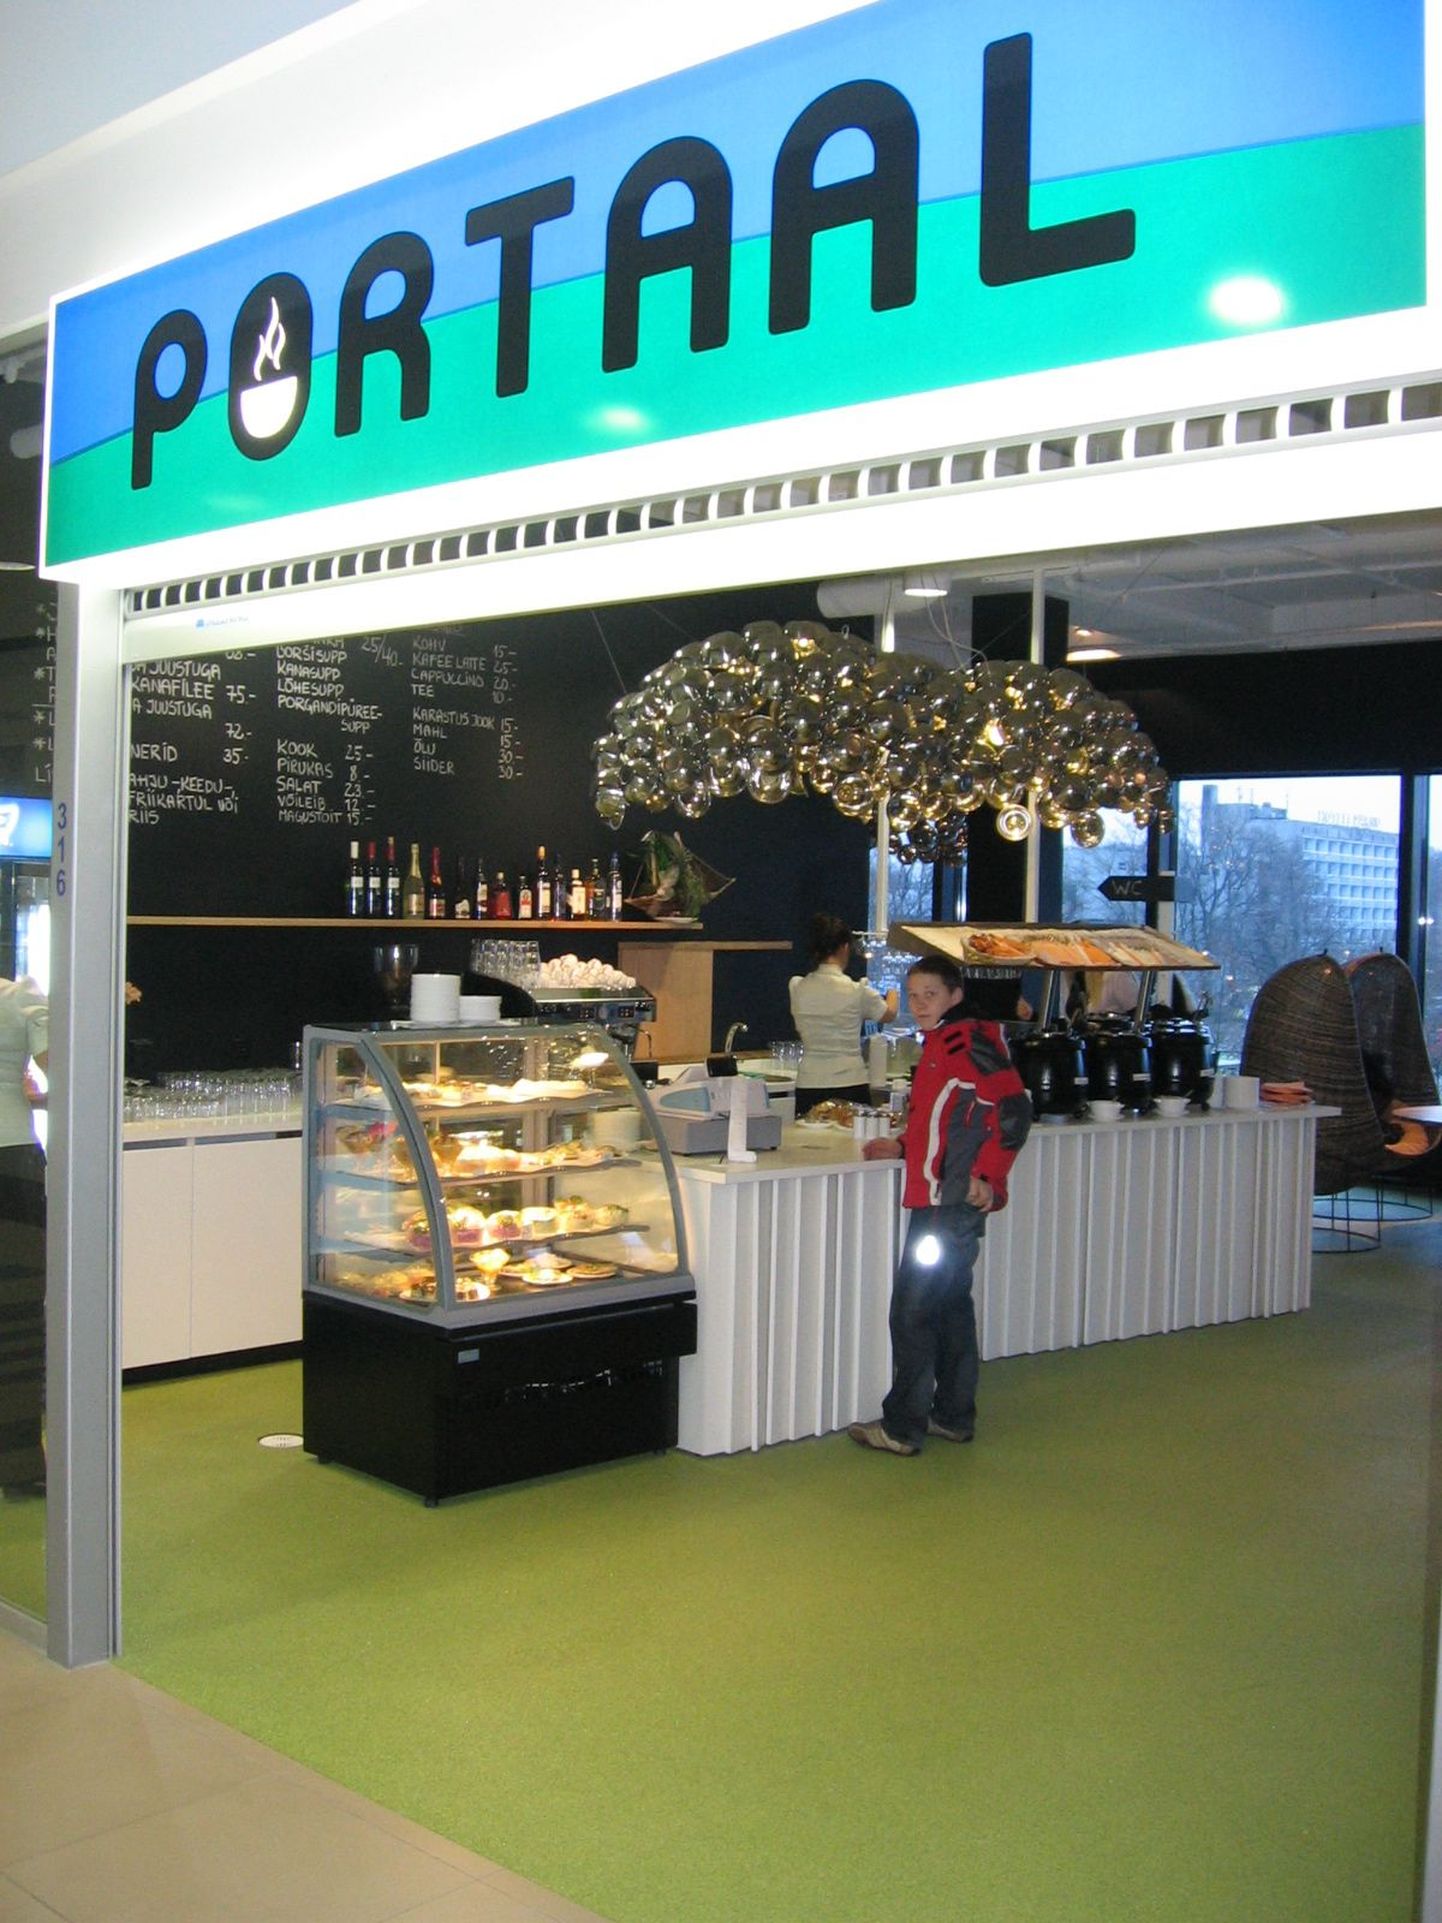 Port Artur 2 avati kohvik-restoran Portaal.